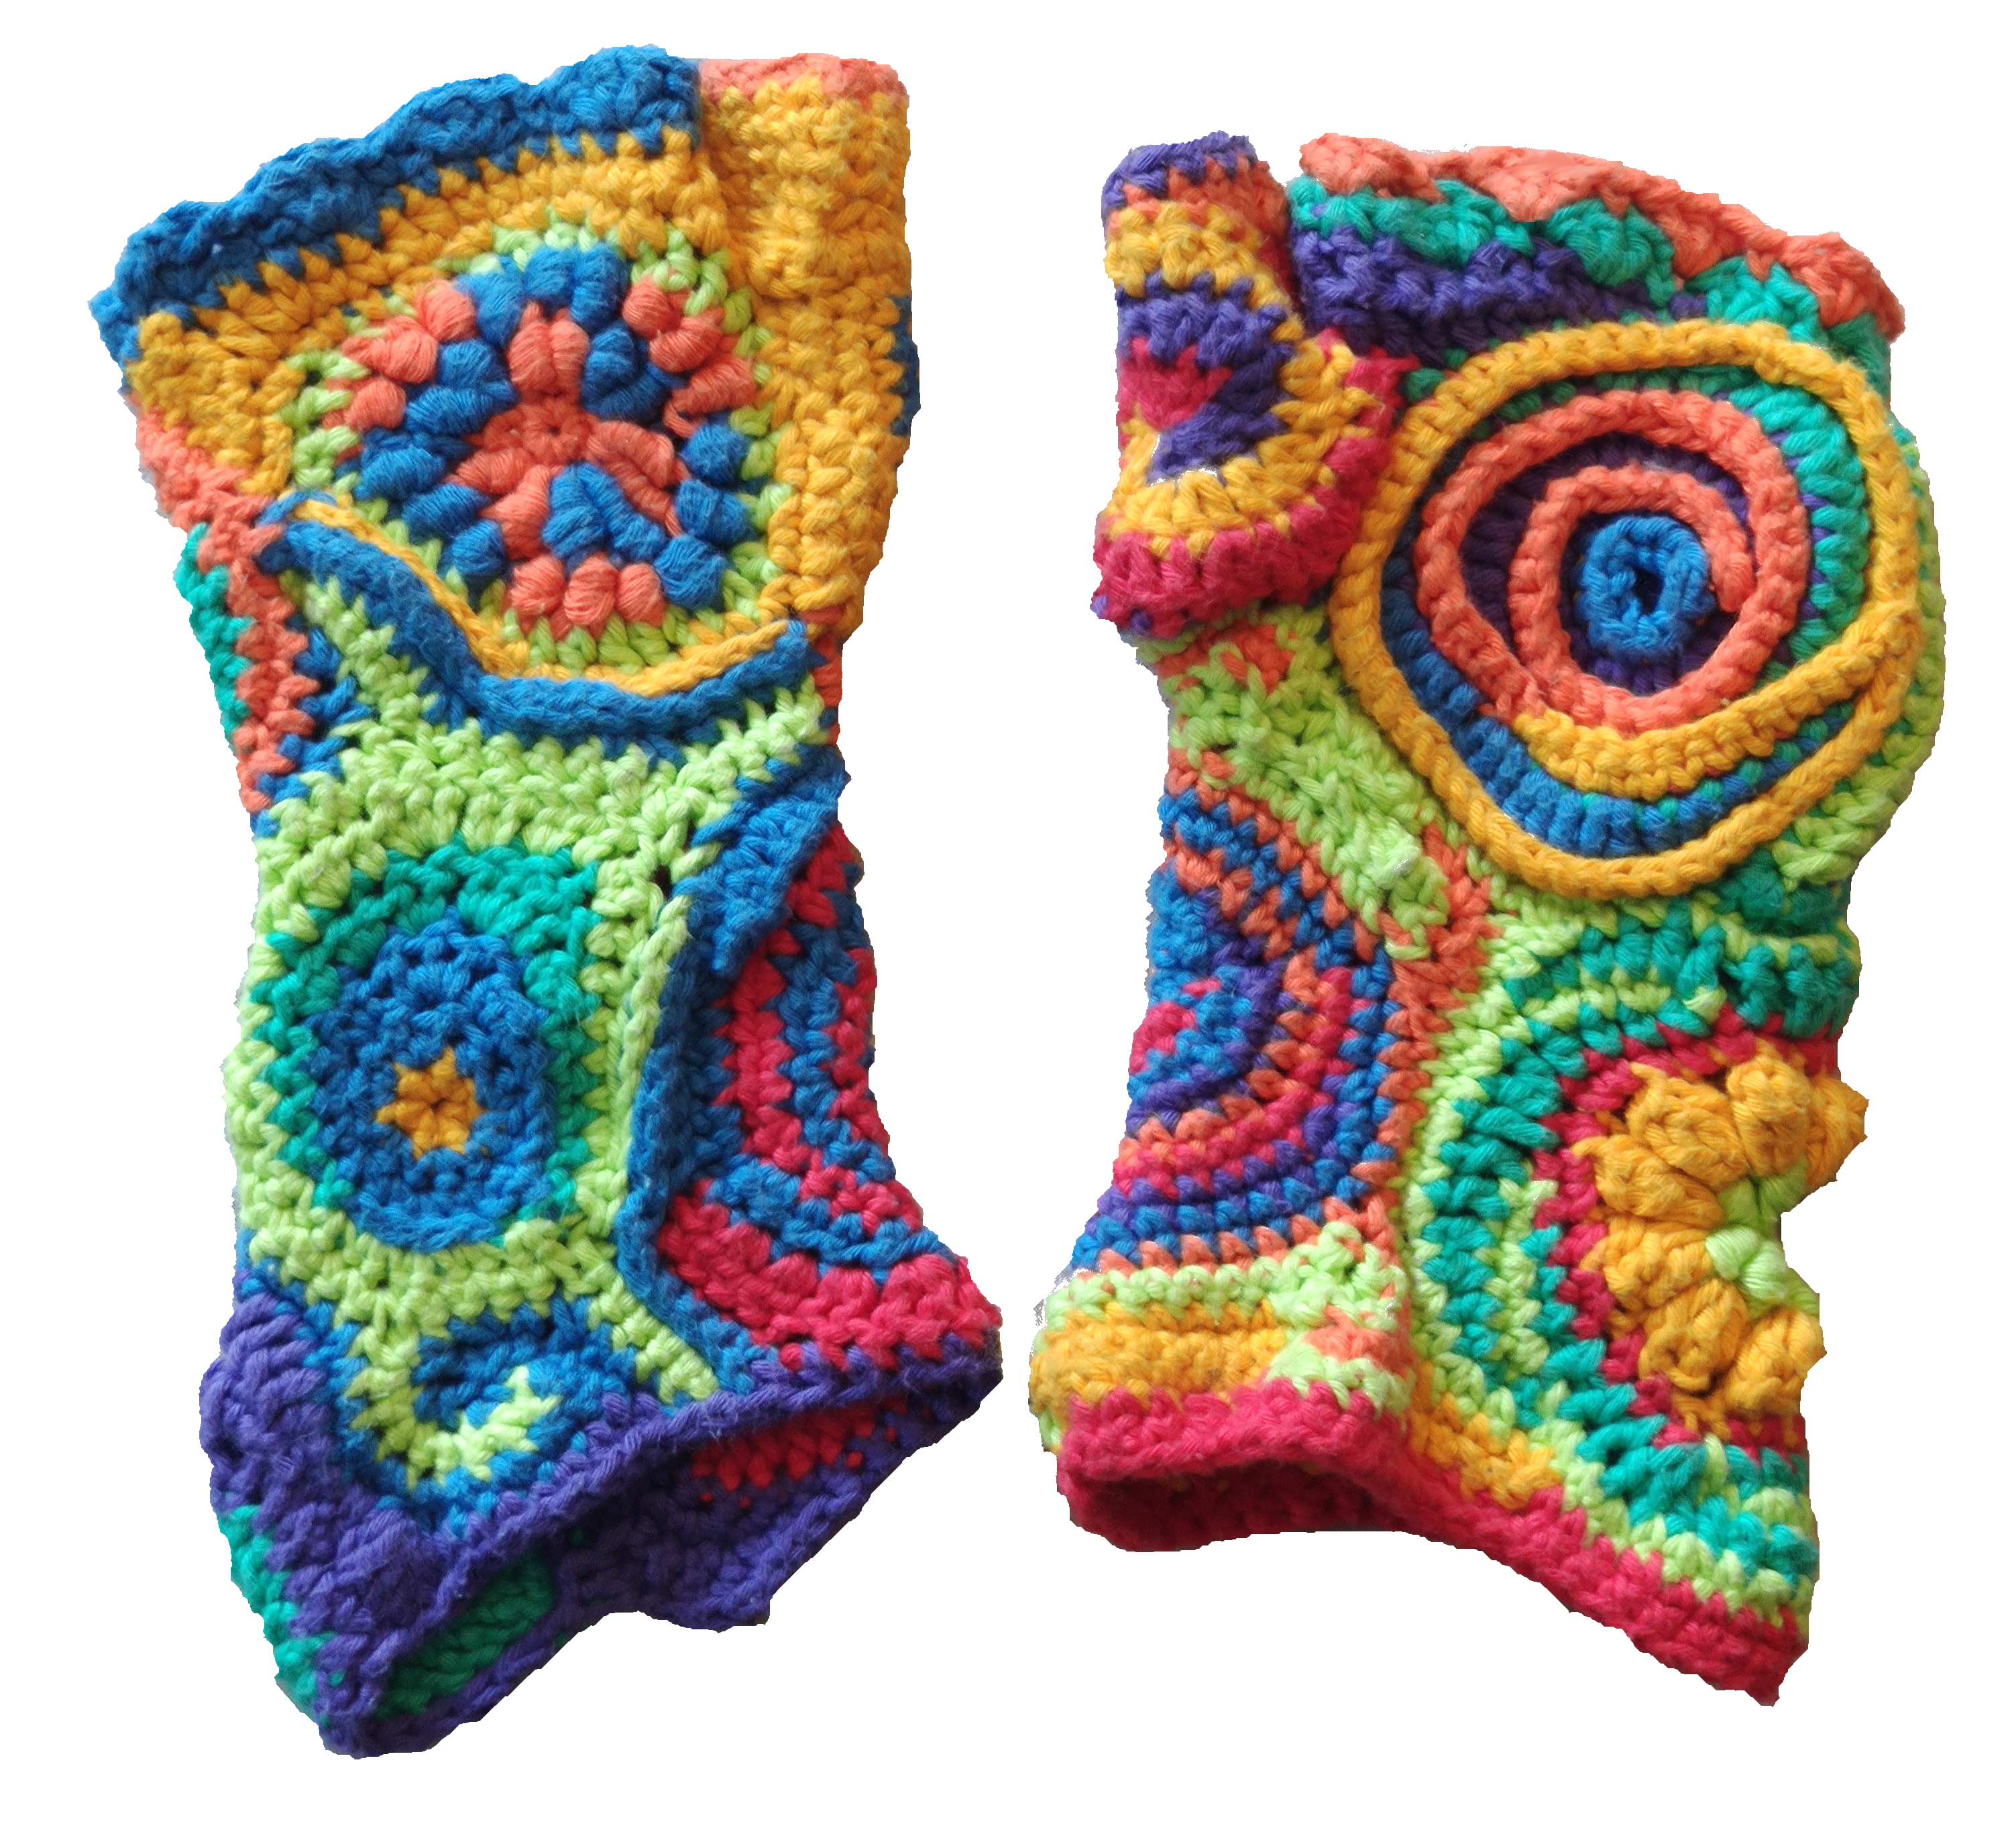 A pair of crochet gloves